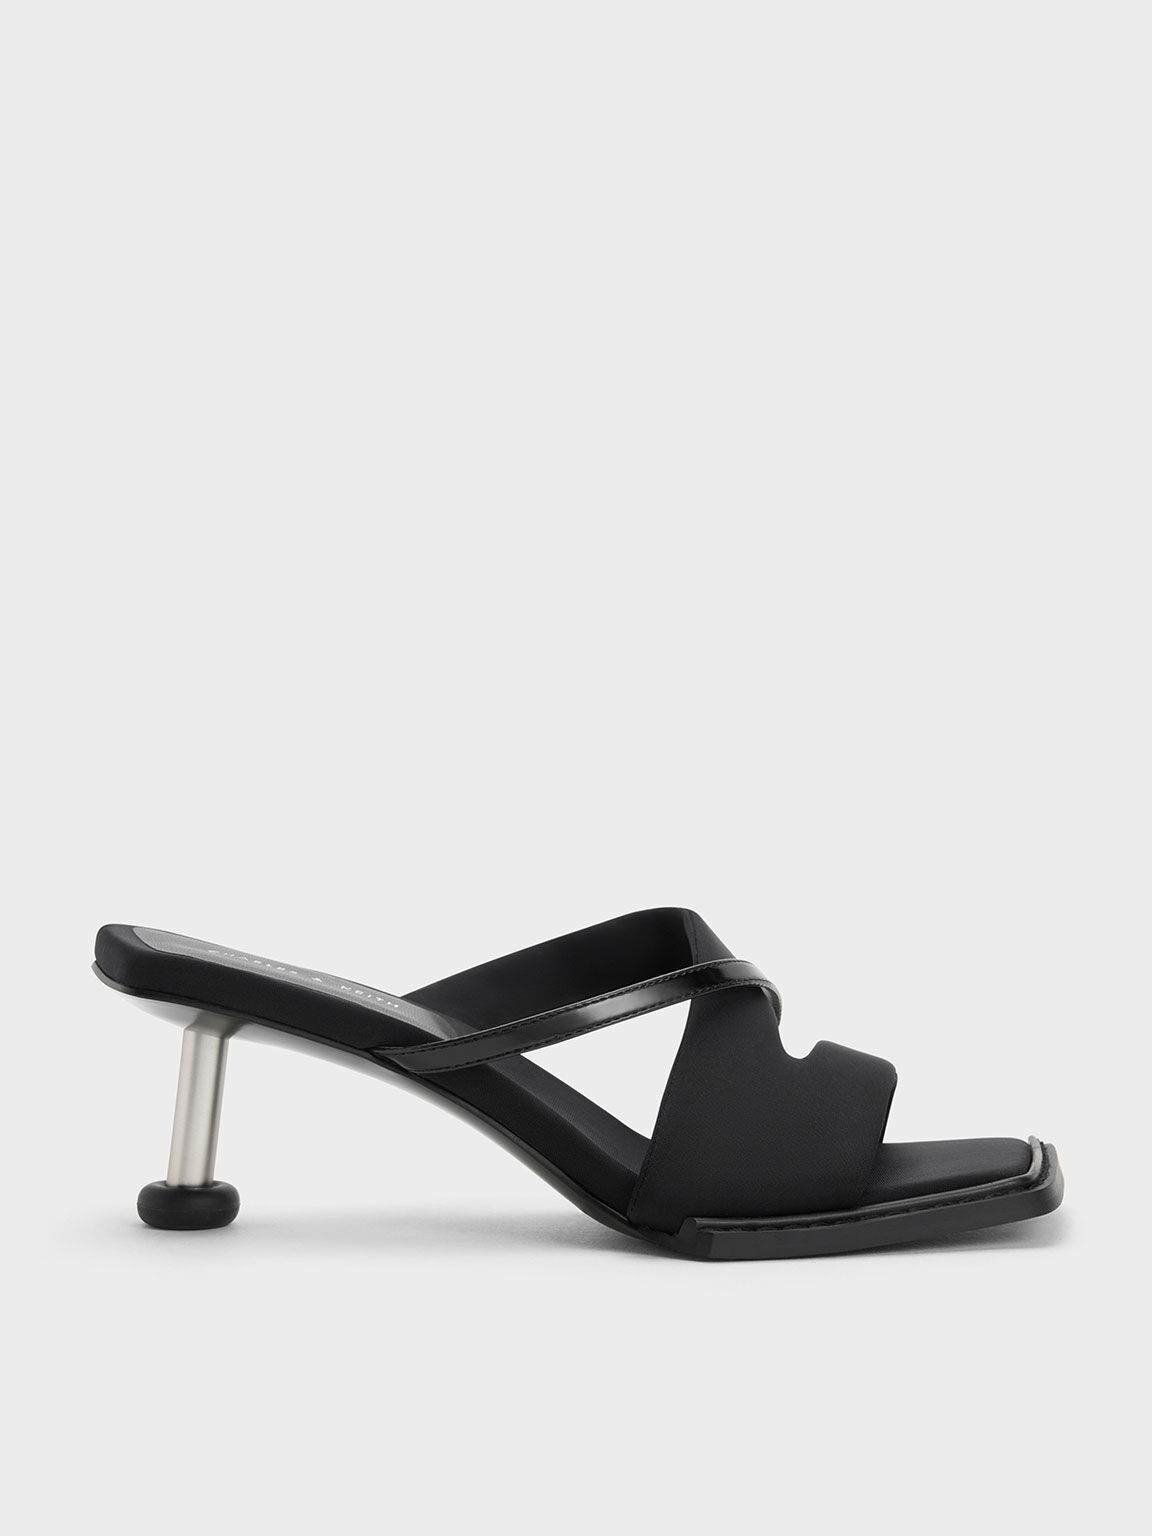 Crossover Sculptural Heel Sandals, Black, hi-res